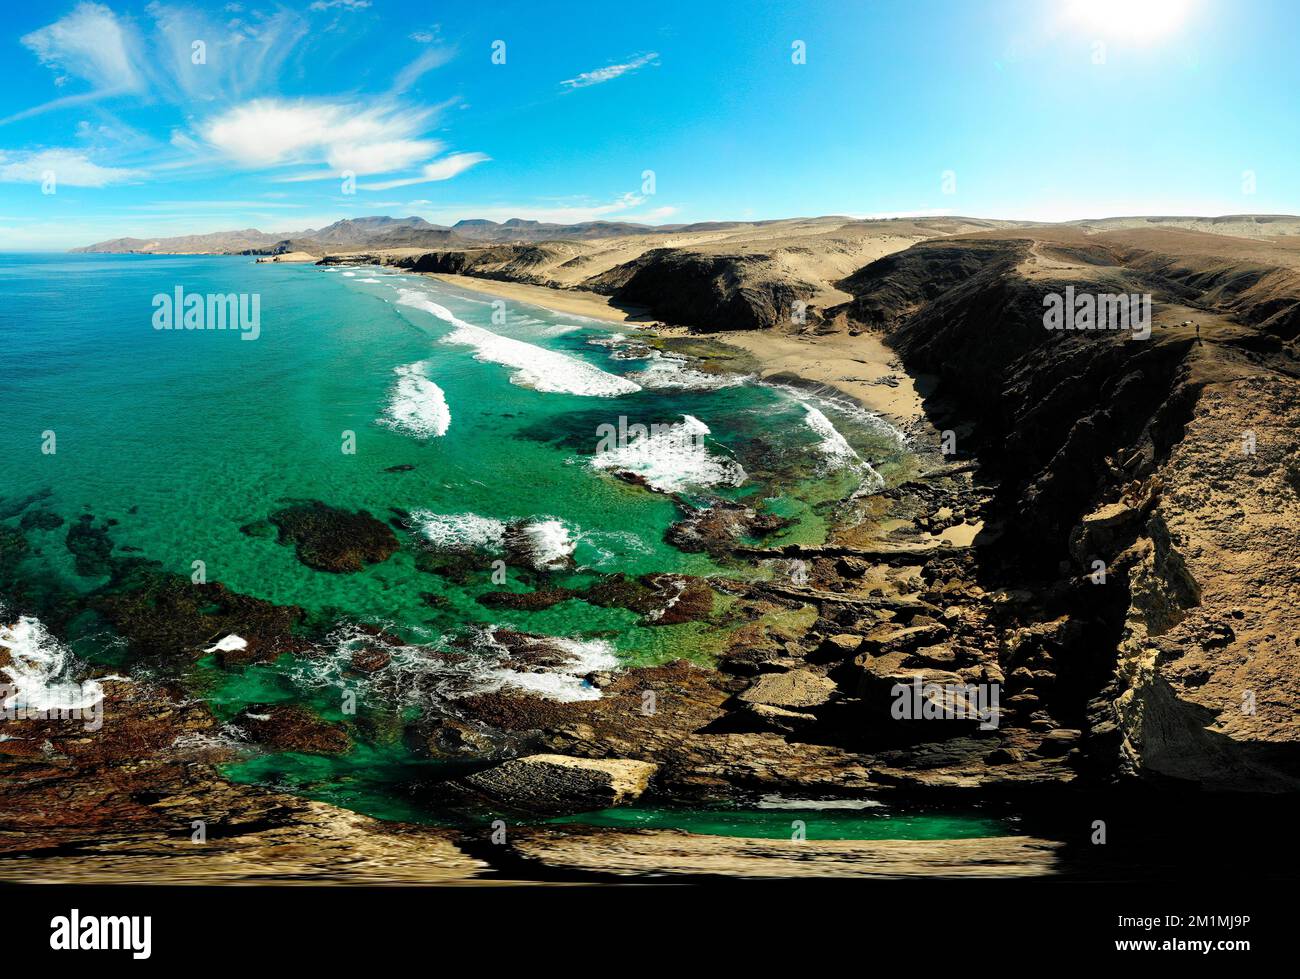 Luftbild: Duenenlandschaft, Atlantischer Ozean bei Istmo de la Pared, Jandia, Fuerteventura, Kanarische Inseln, Spanien/ Fuerteventura, Canary Islands Stock Photo